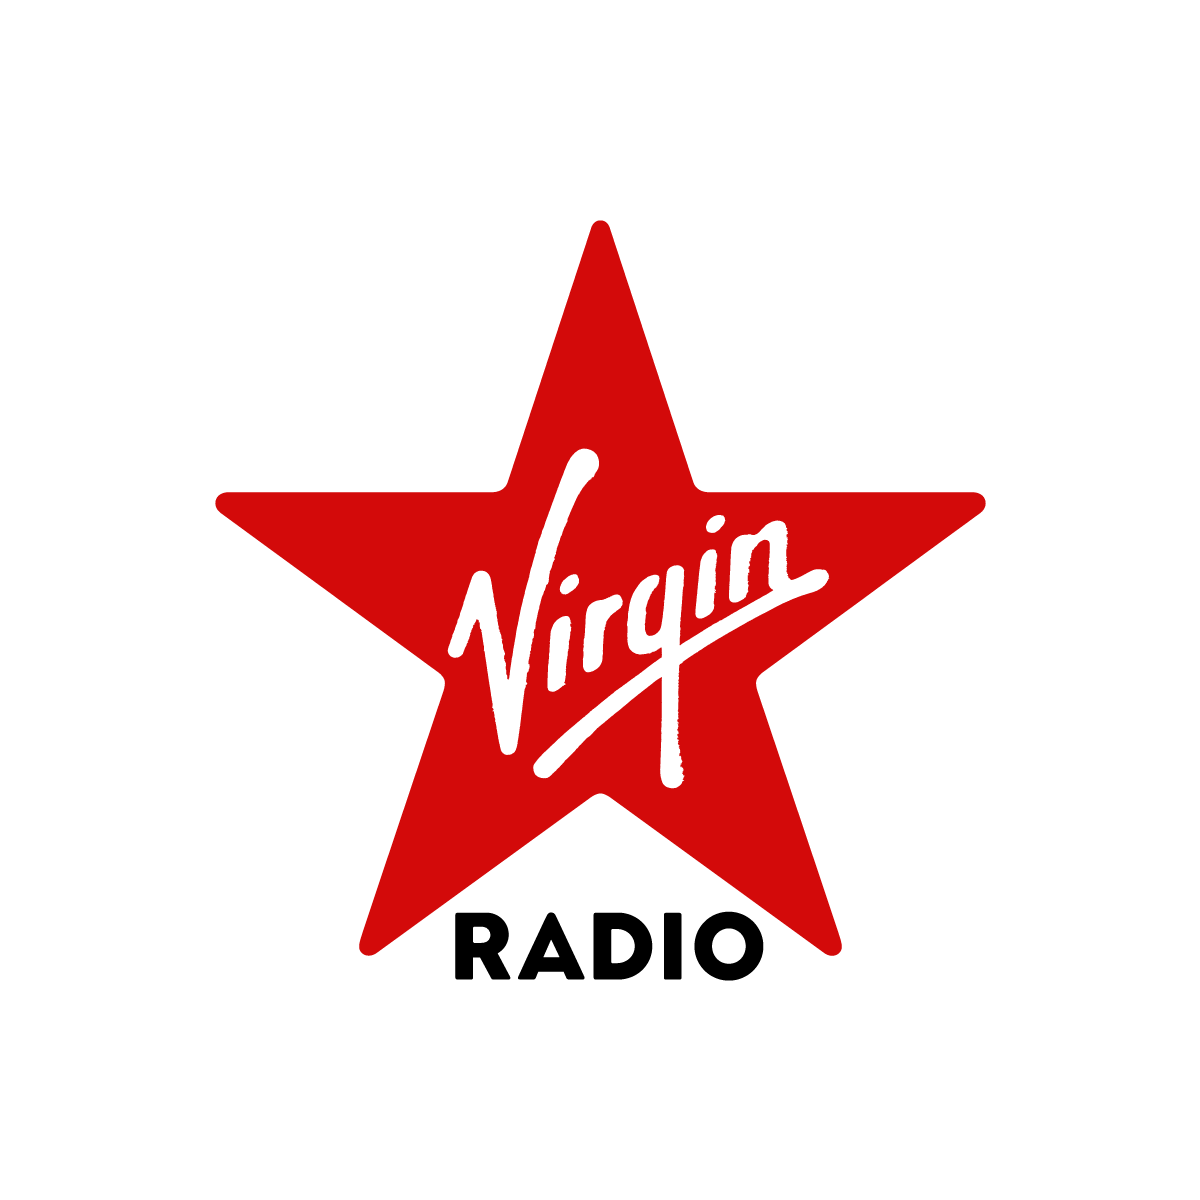 Virgin Radio logo